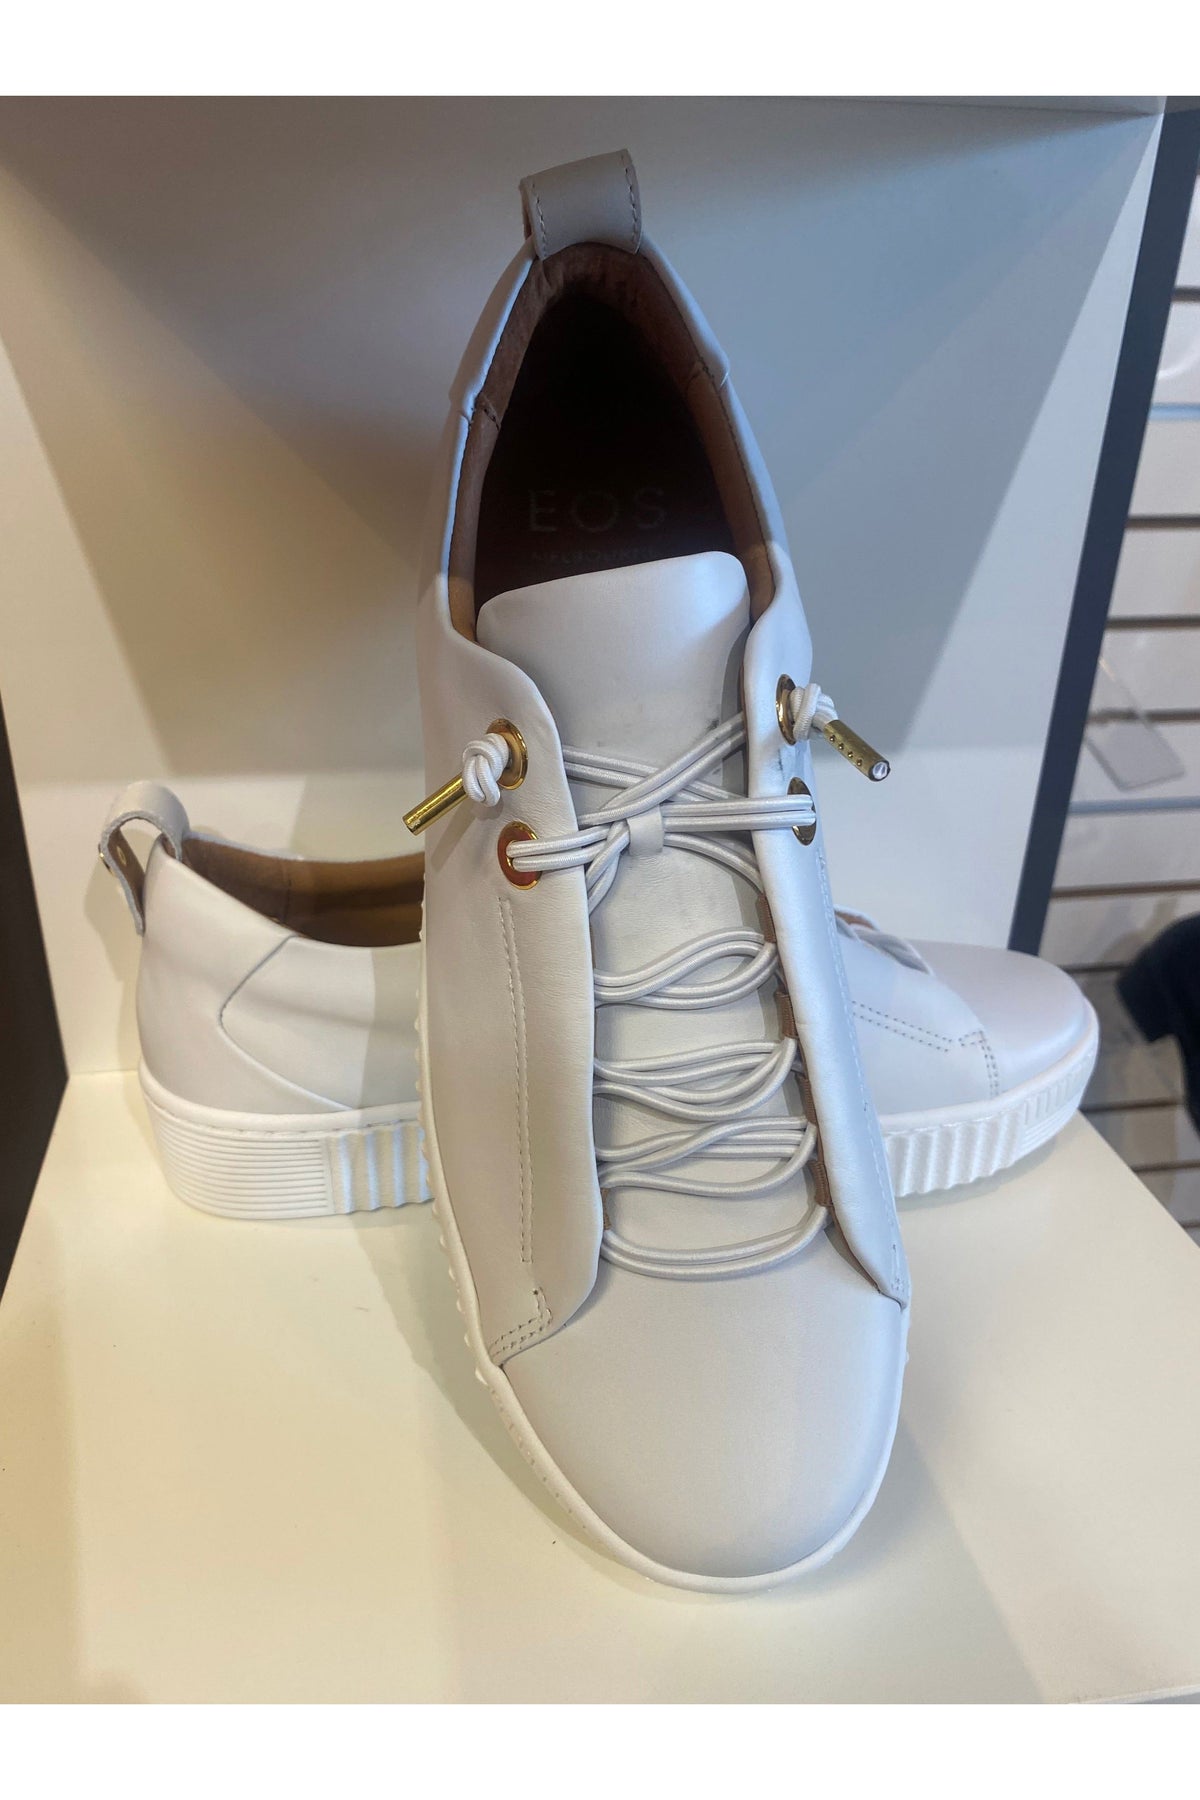 EOS Fashion Sneaker - Style Jool, pair top